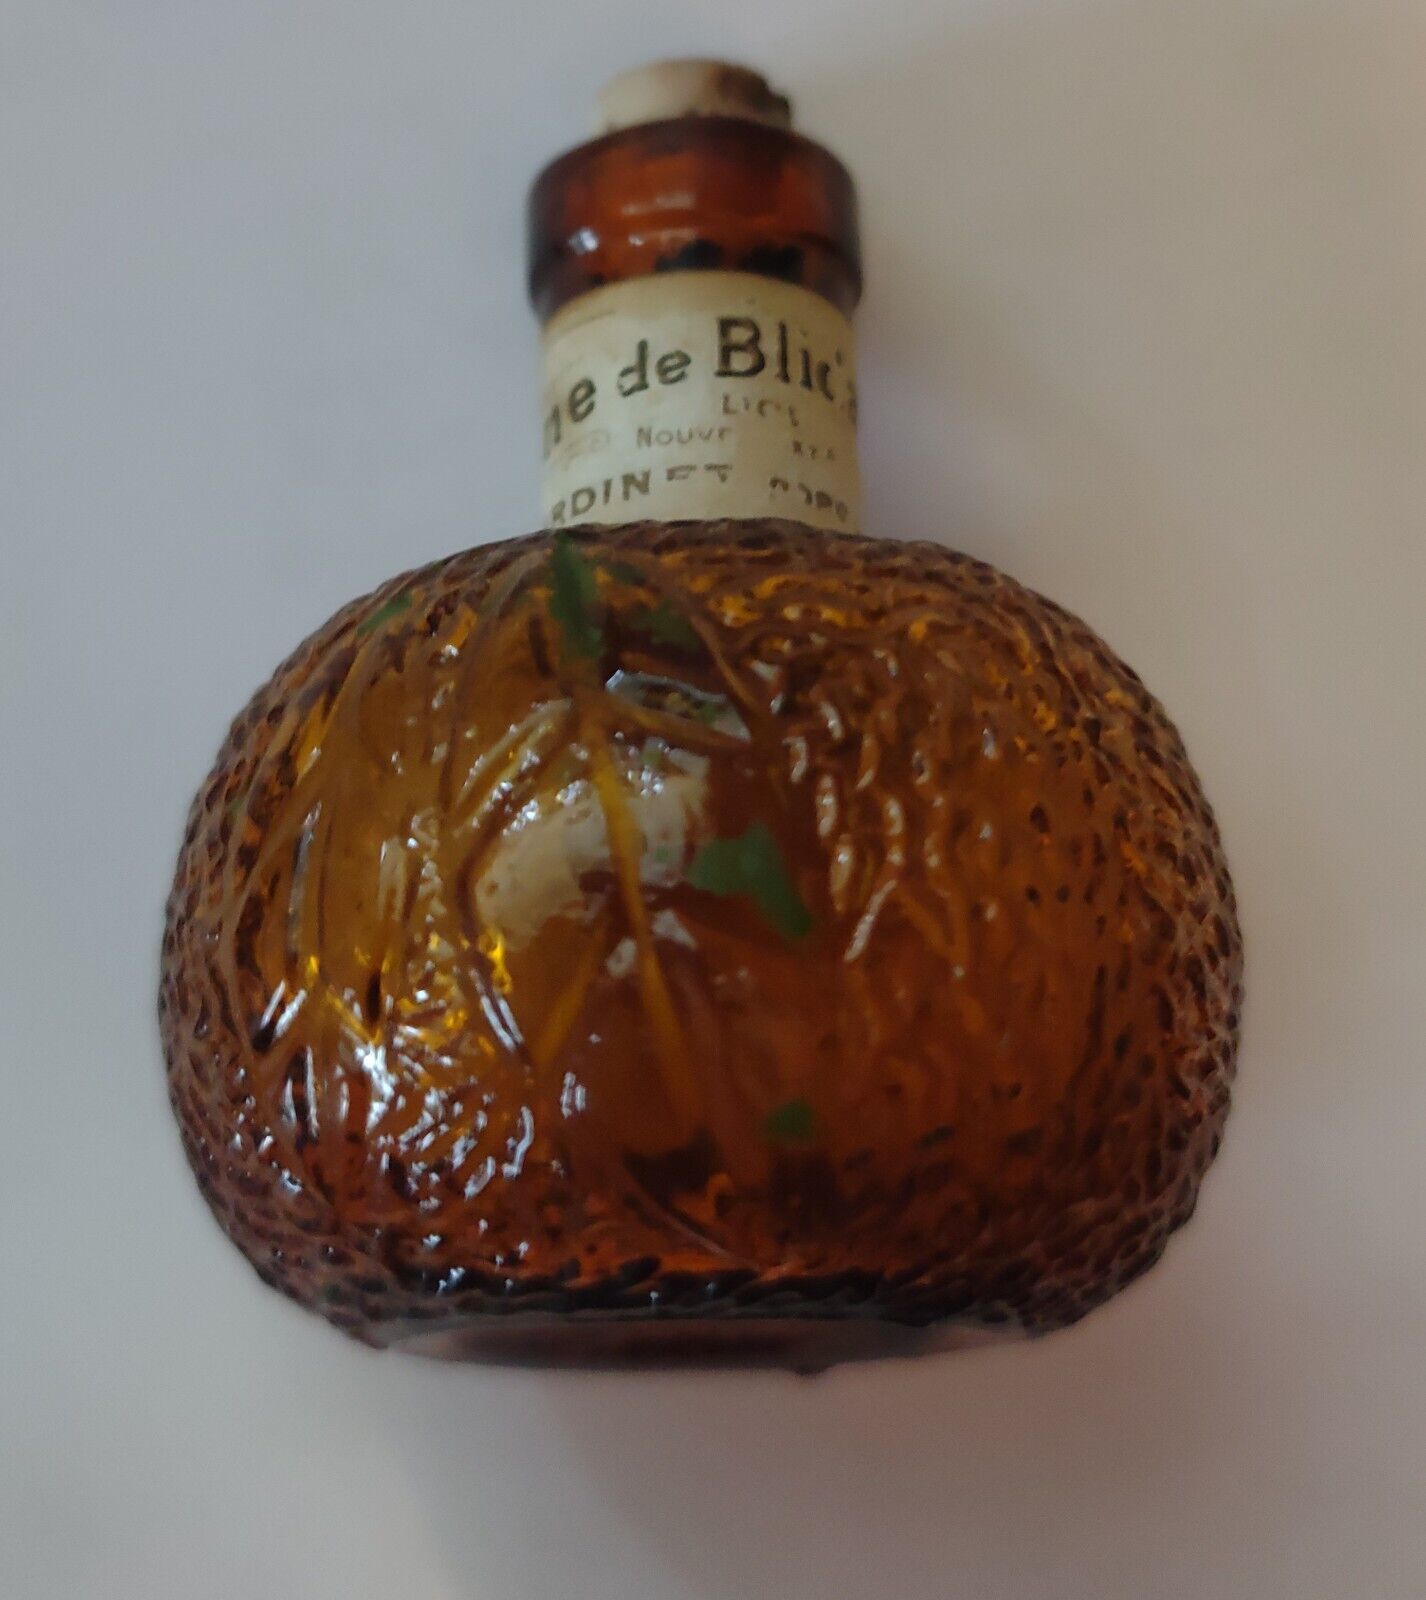 Vintage bottle creme mandarine de p. bardinet napoleon, glass orange shape  s2